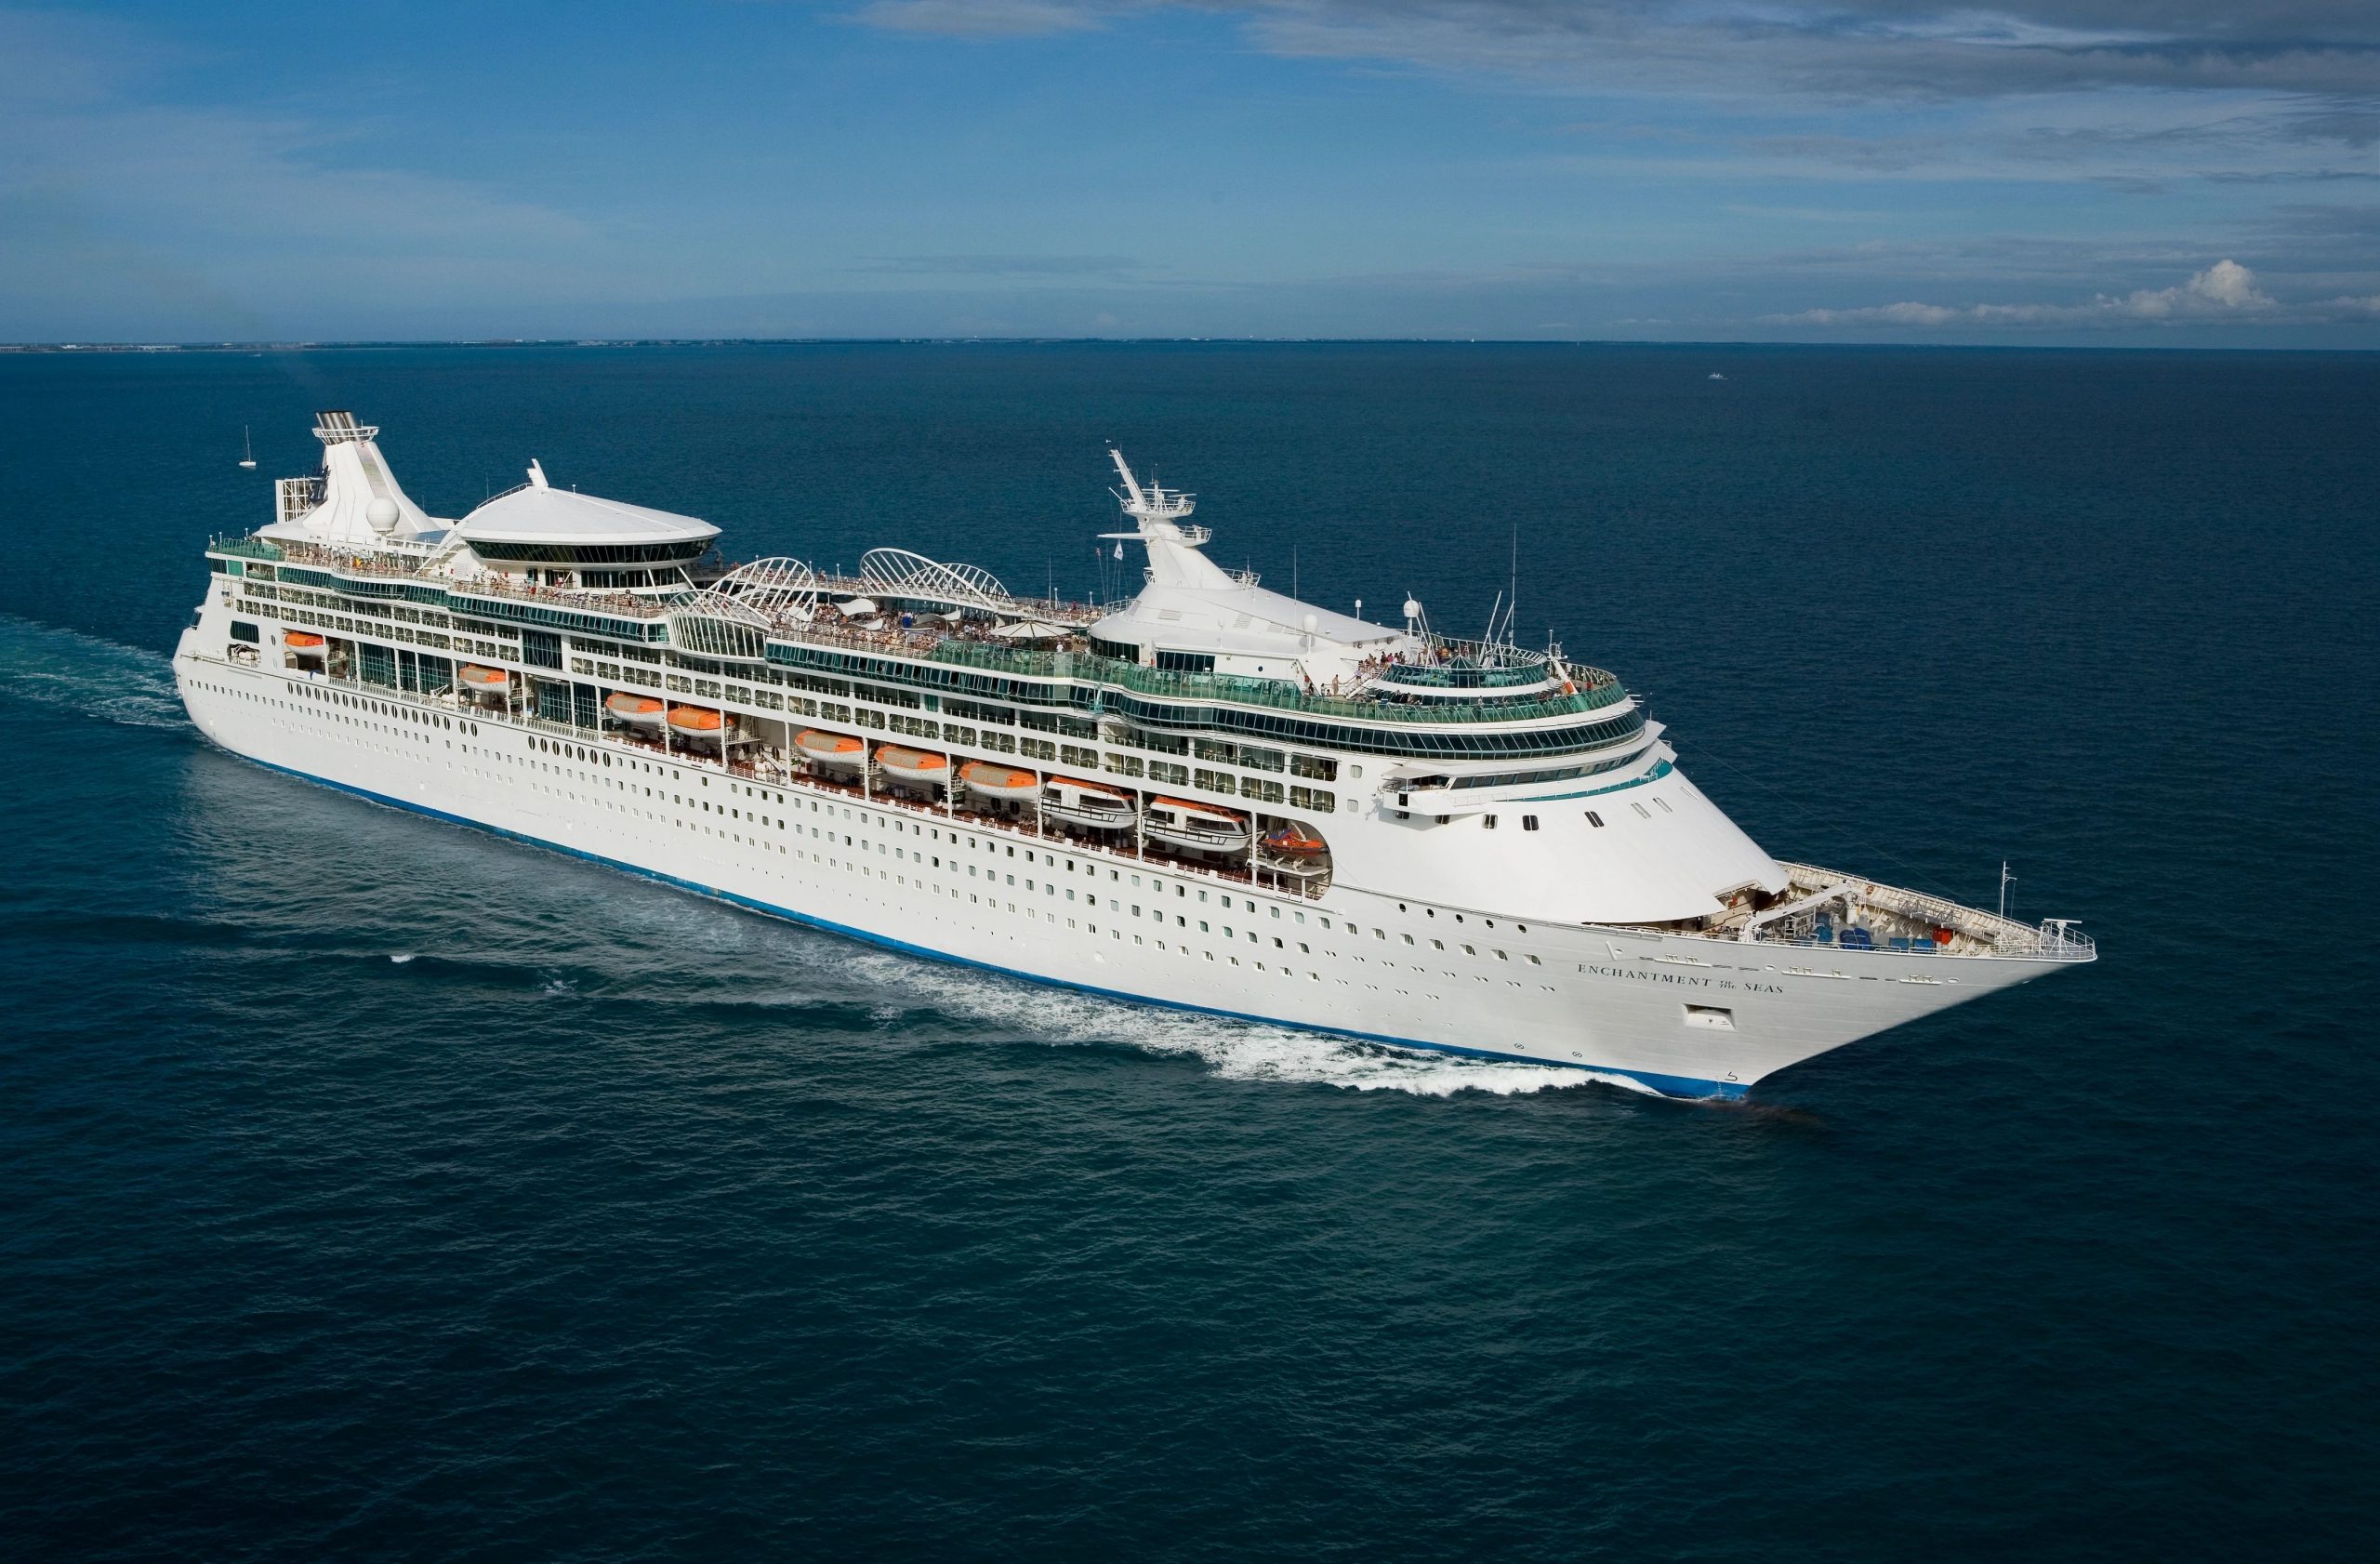 Cruise Ships - Introducing Royal Caribbean's Vision Class Cruise Ships